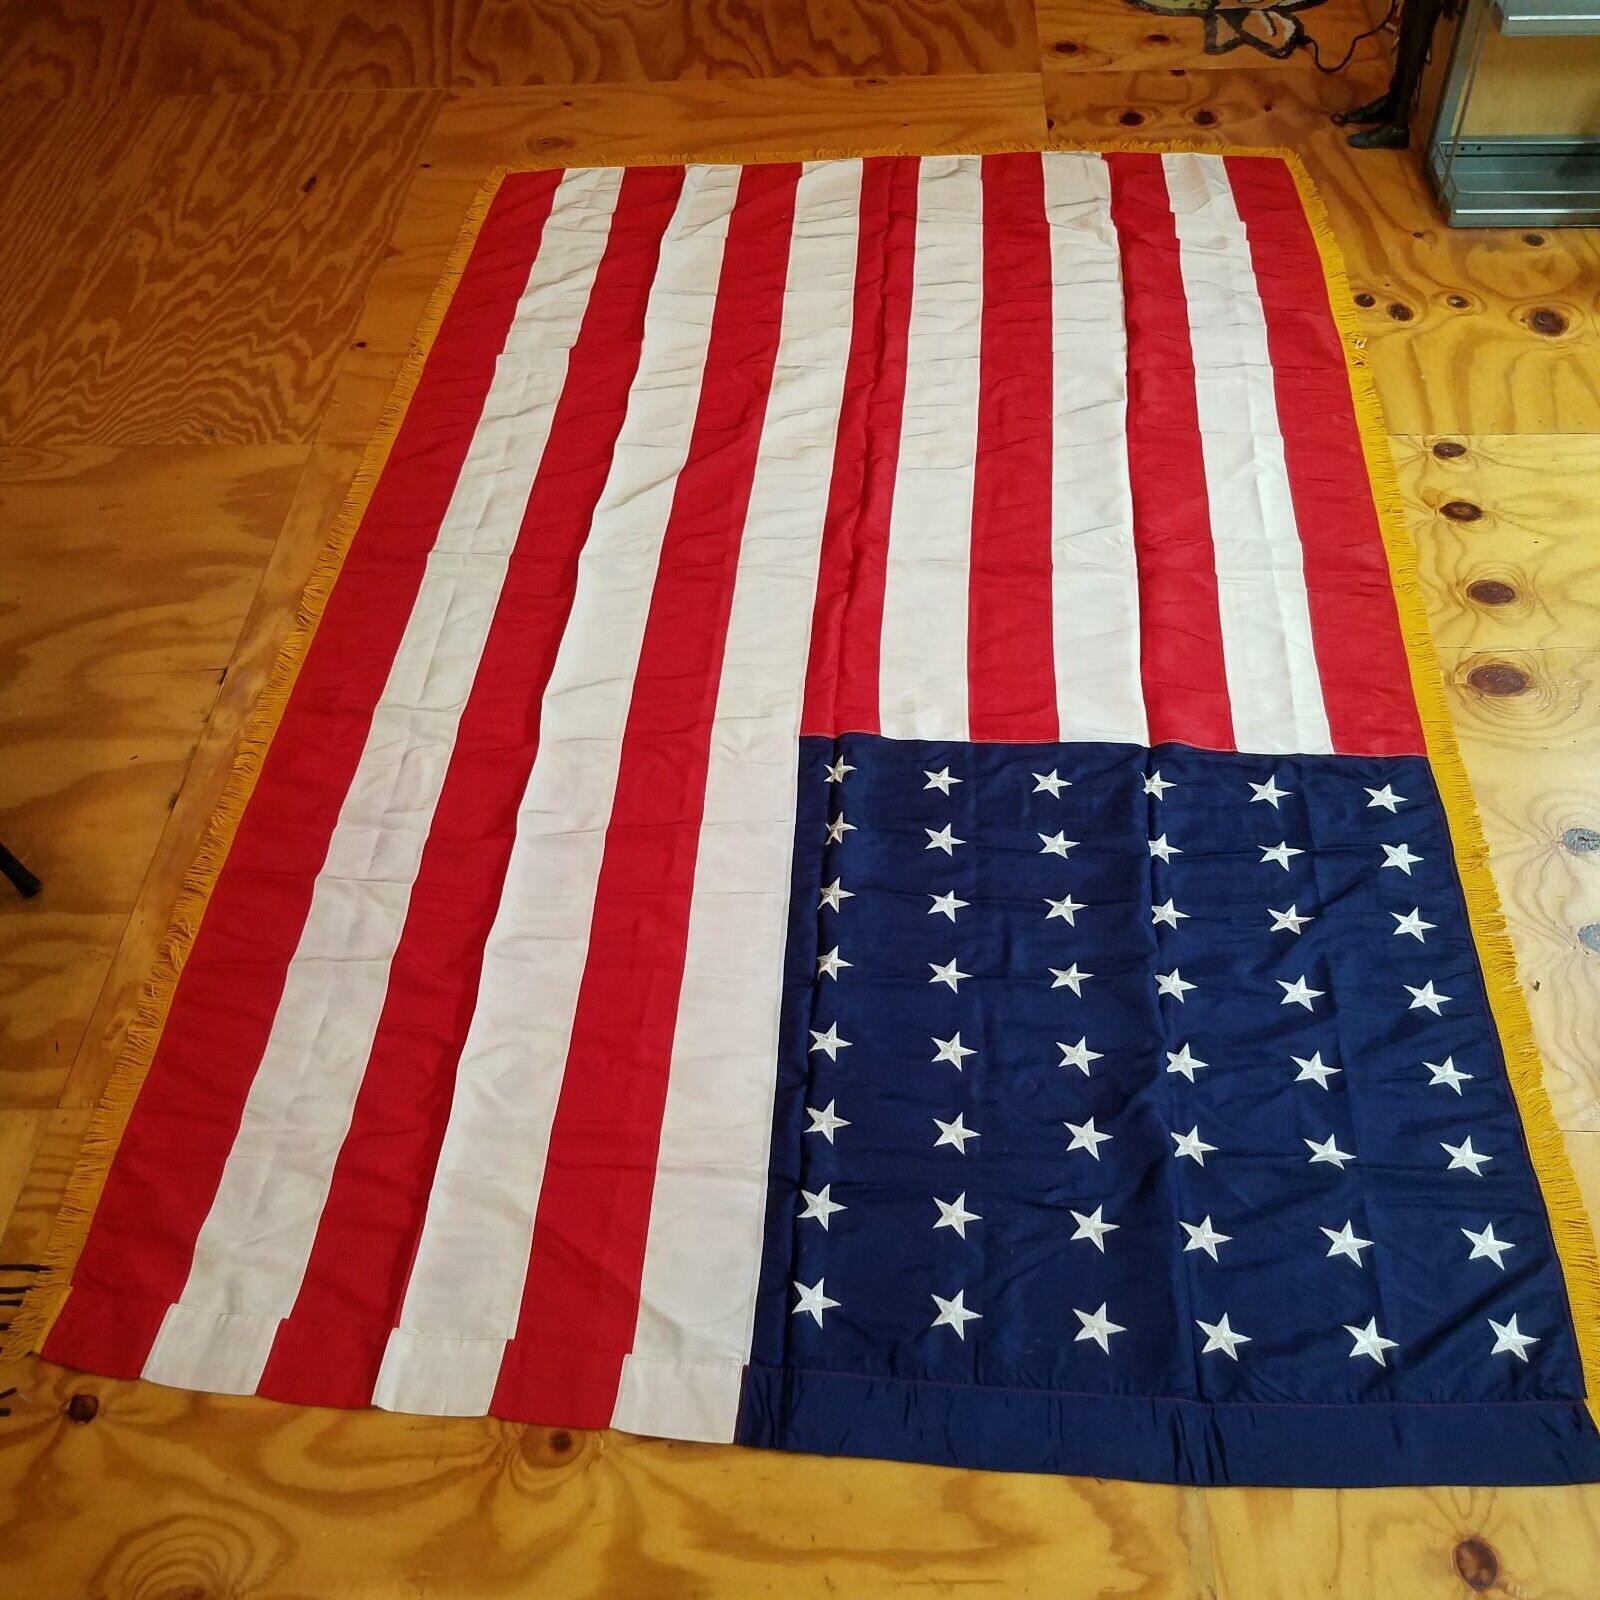 HUGE VTG 8 X 5 48 Star American Flag W Gold Colored Fringe (see photos)